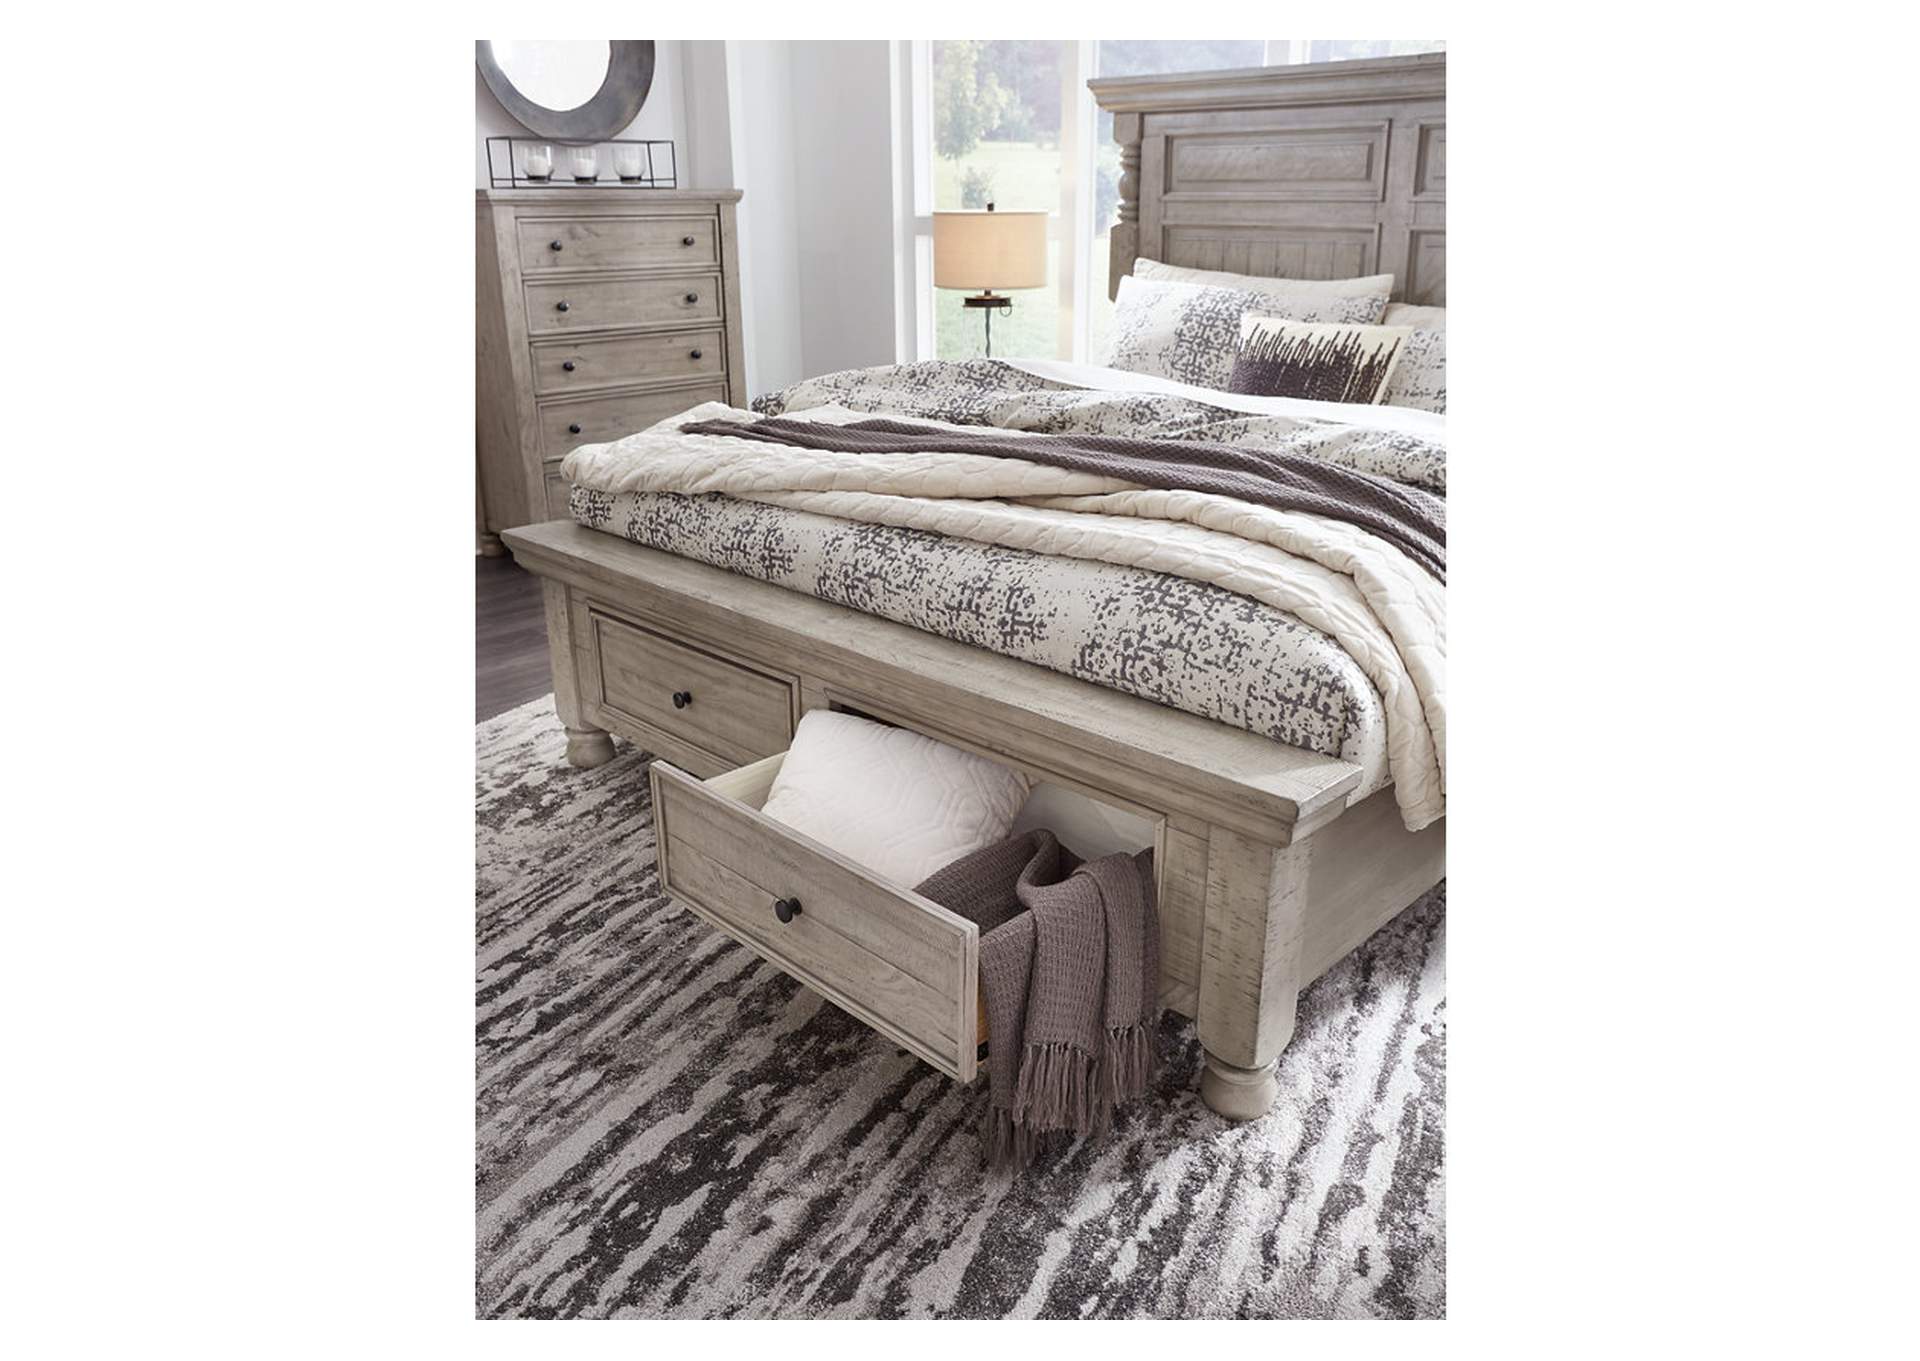 Harrastone King Panel Bed with Dresser,Millennium